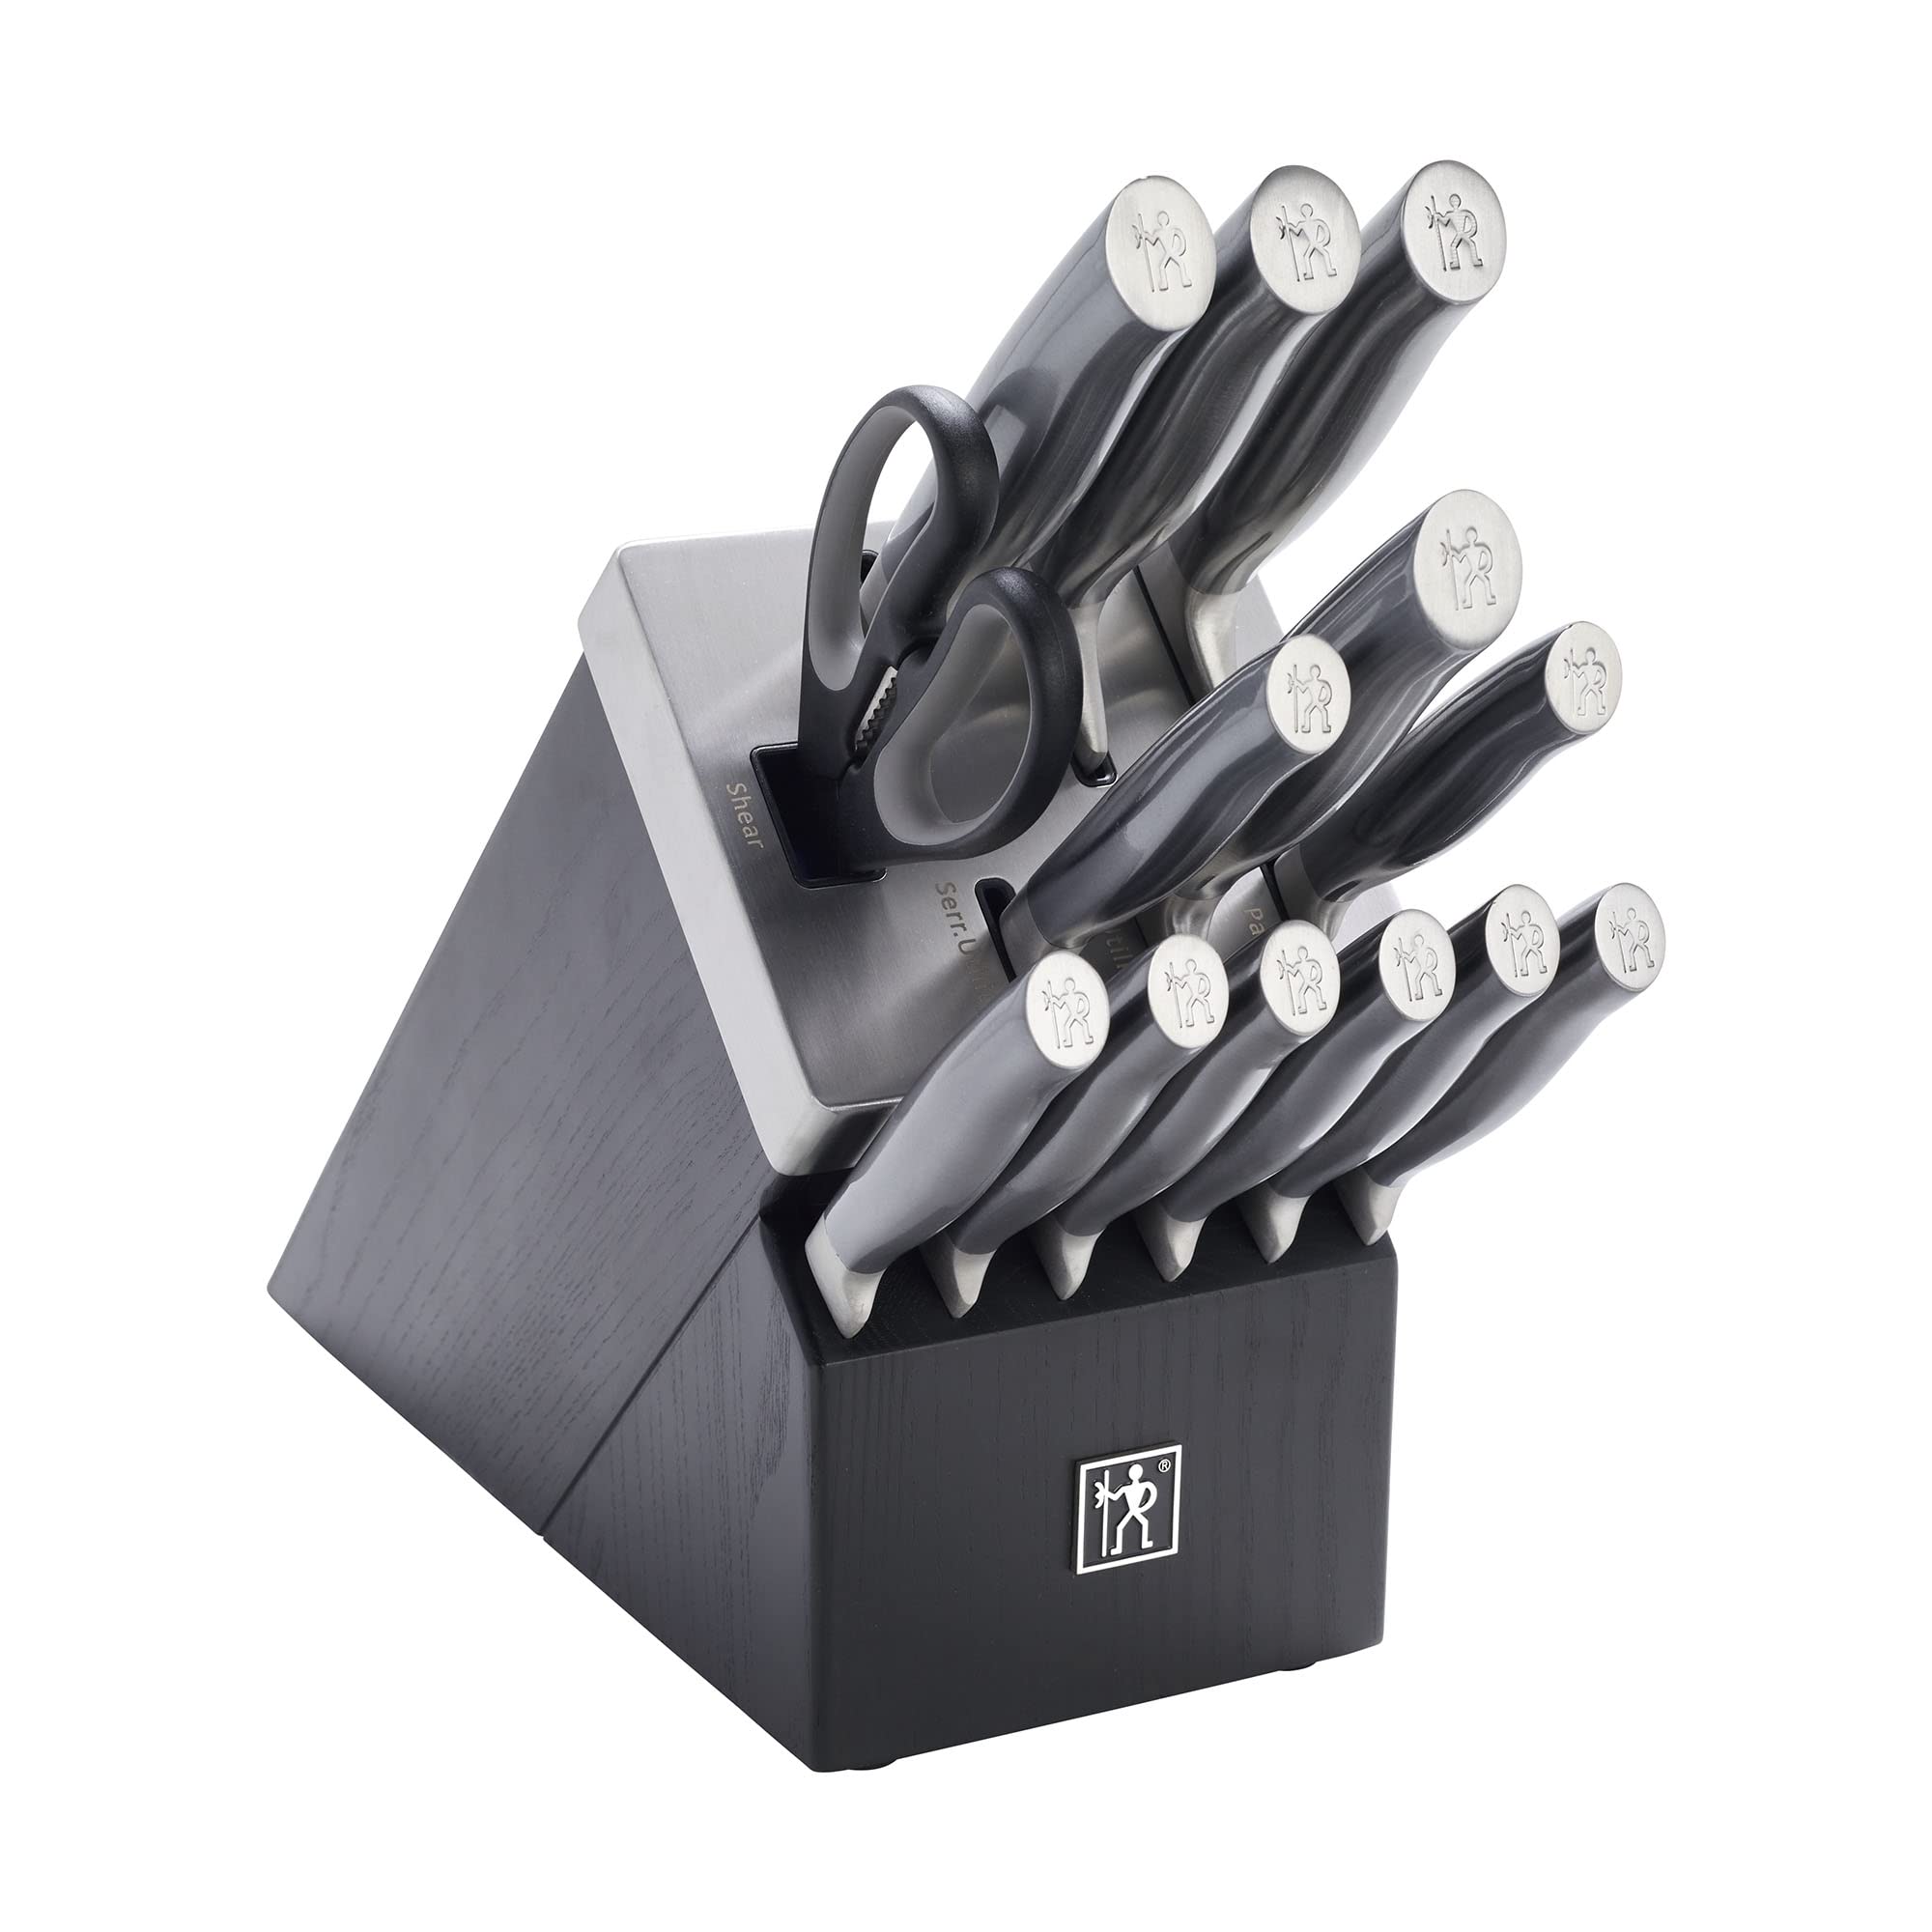 HENCKELS Graphite 14-pc Self-Sharpening Knife Set with Block, Chef Knife, Paring Knife, Utility Knife, Bread Knife, Steak Knife, Black, Stainless Steel